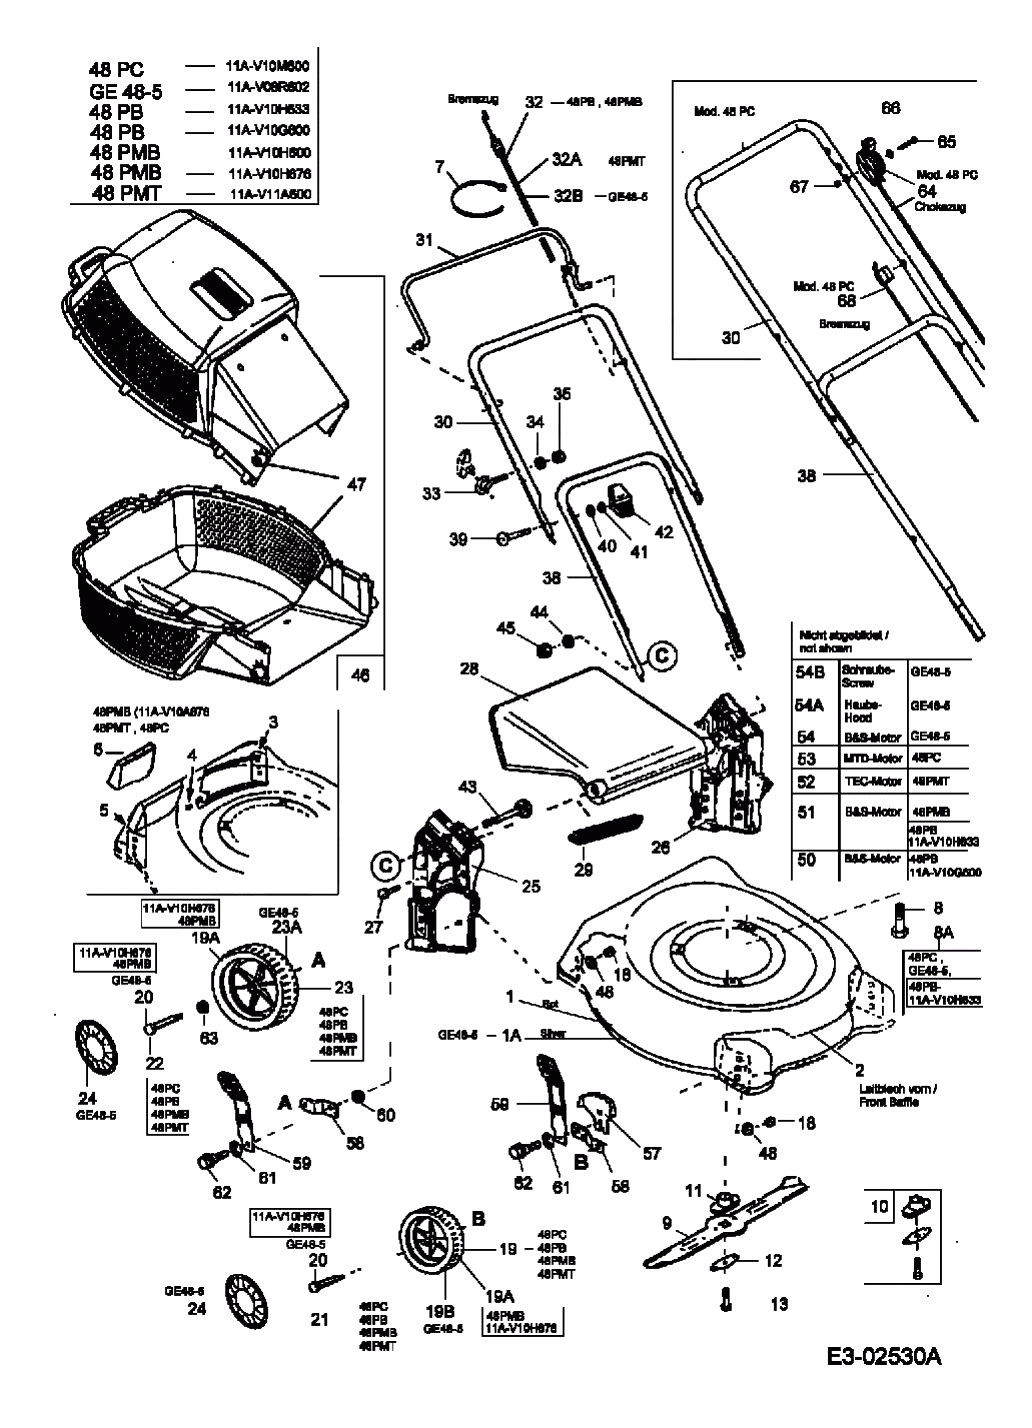 MTD Артикул 11A-V10H676 (год выпуска 2005). Основная деталировка